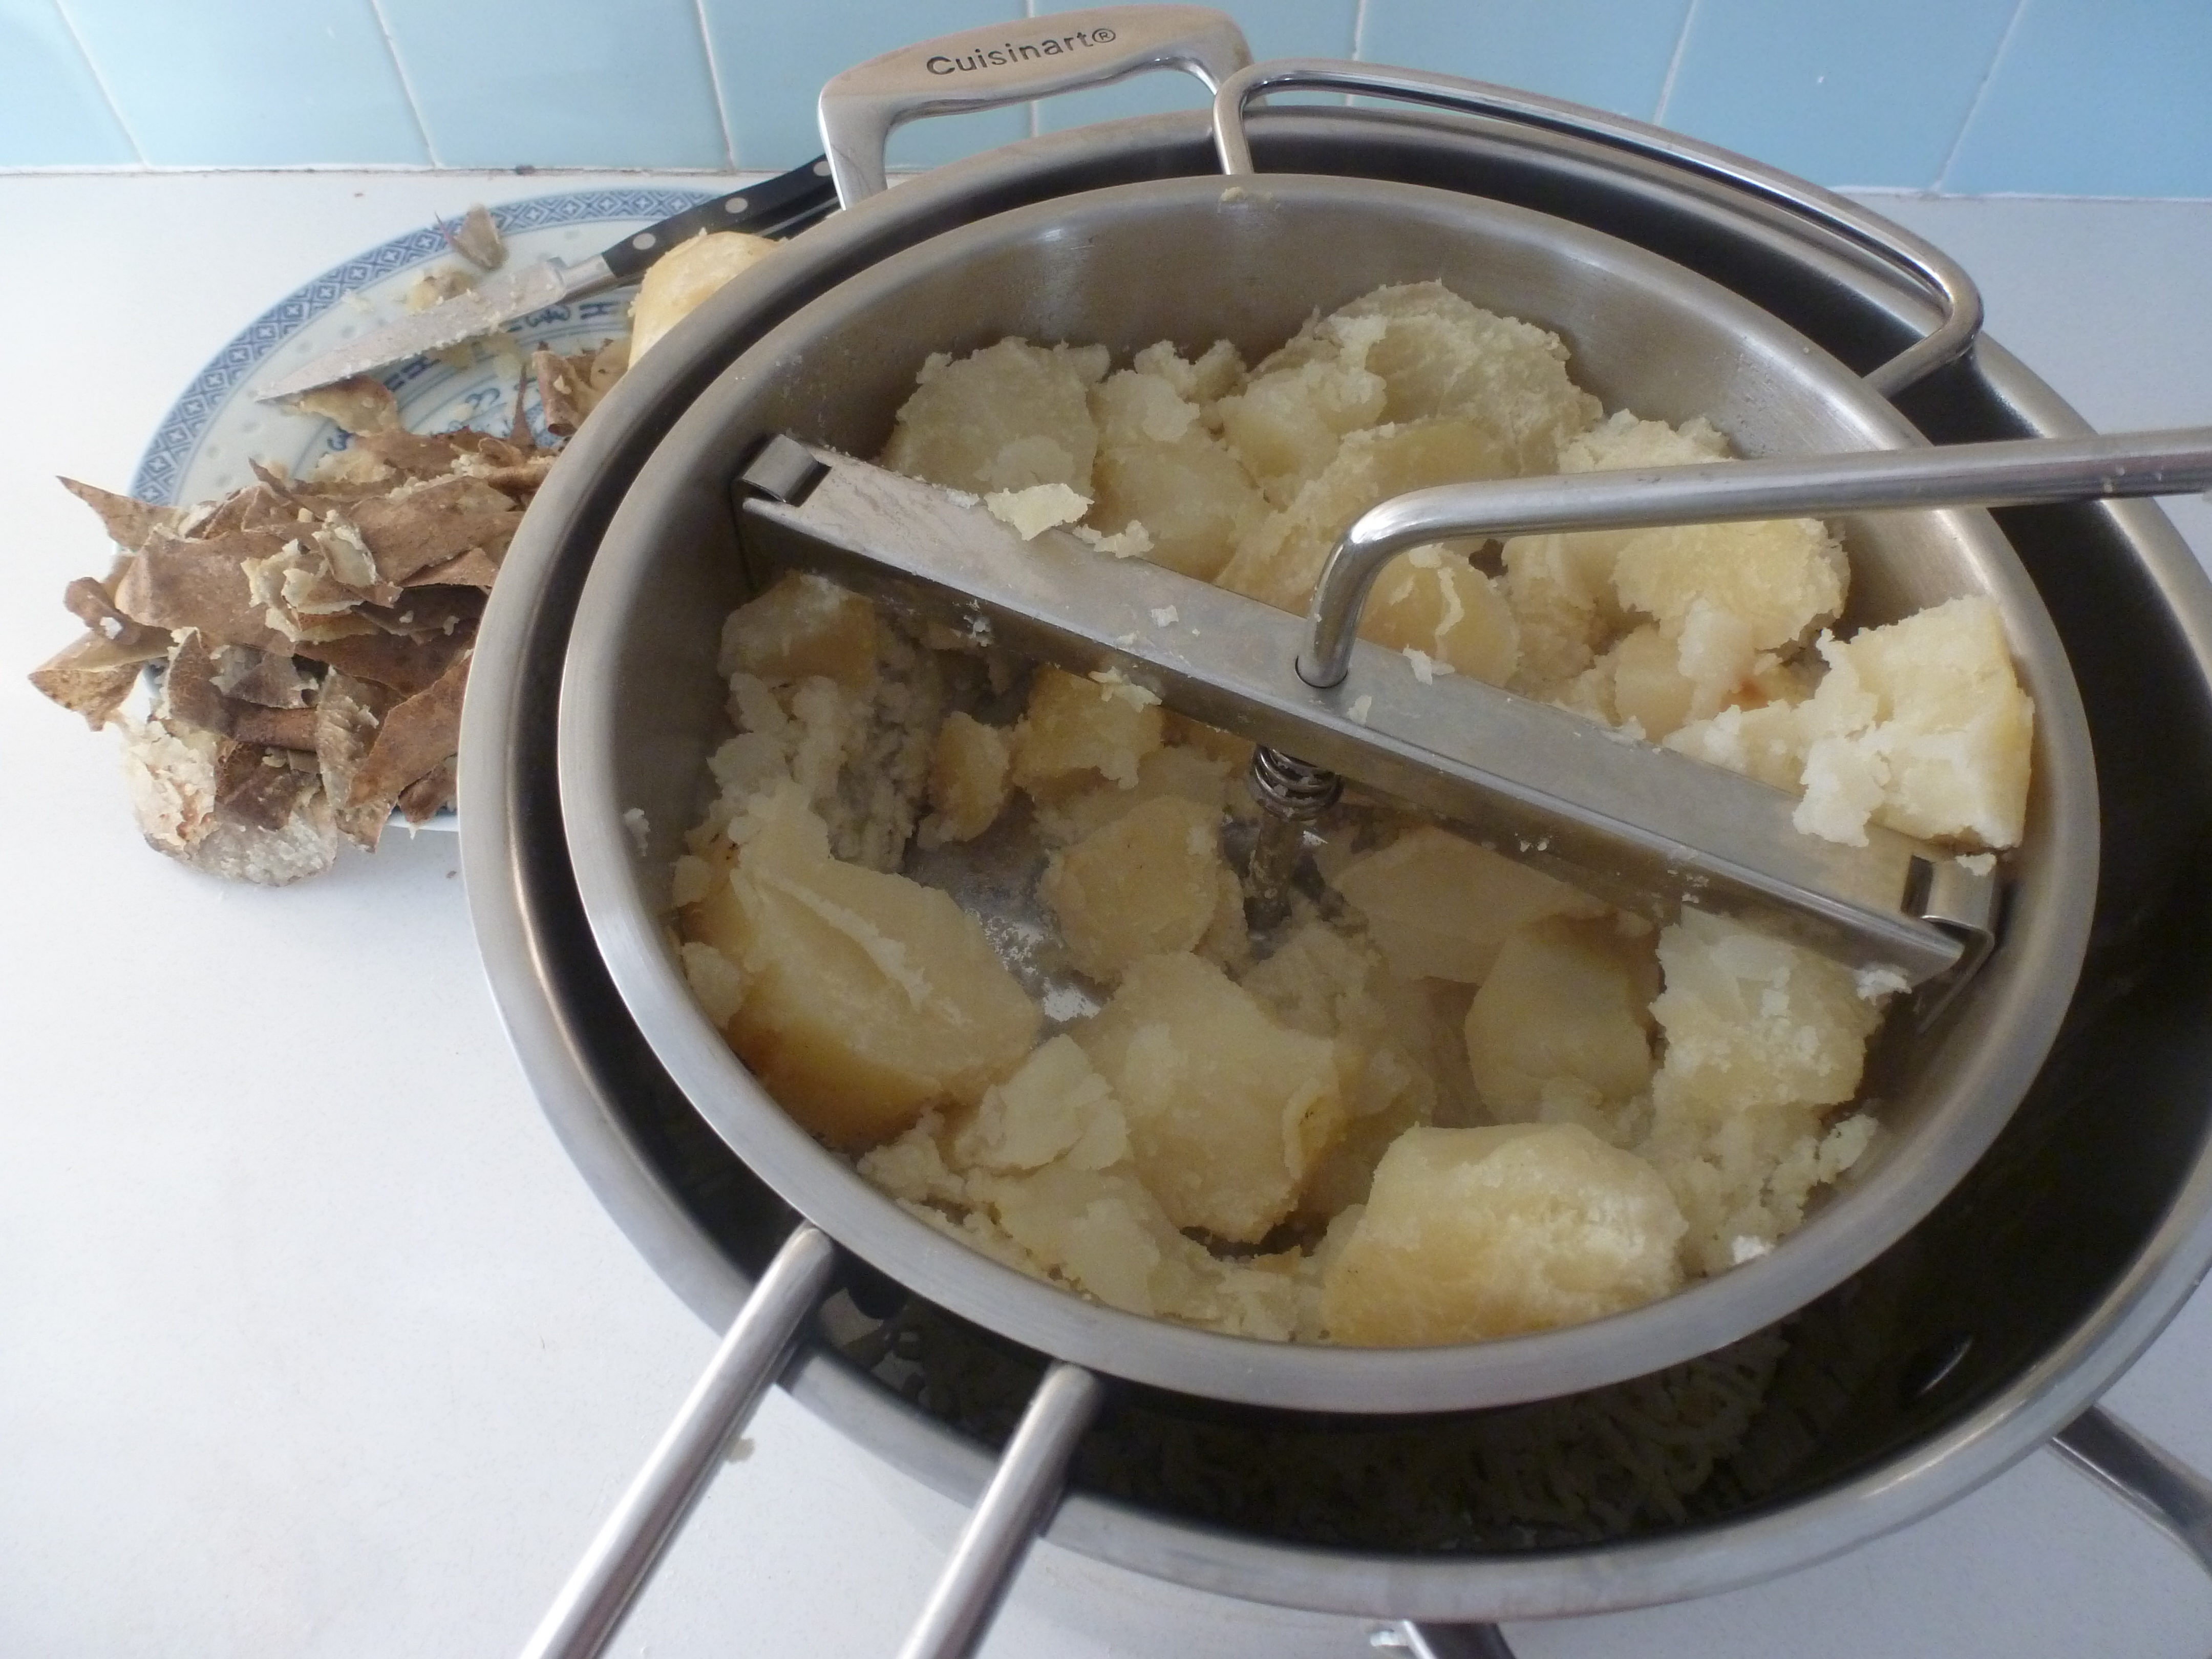 Milling the baked potatoes to make perogies